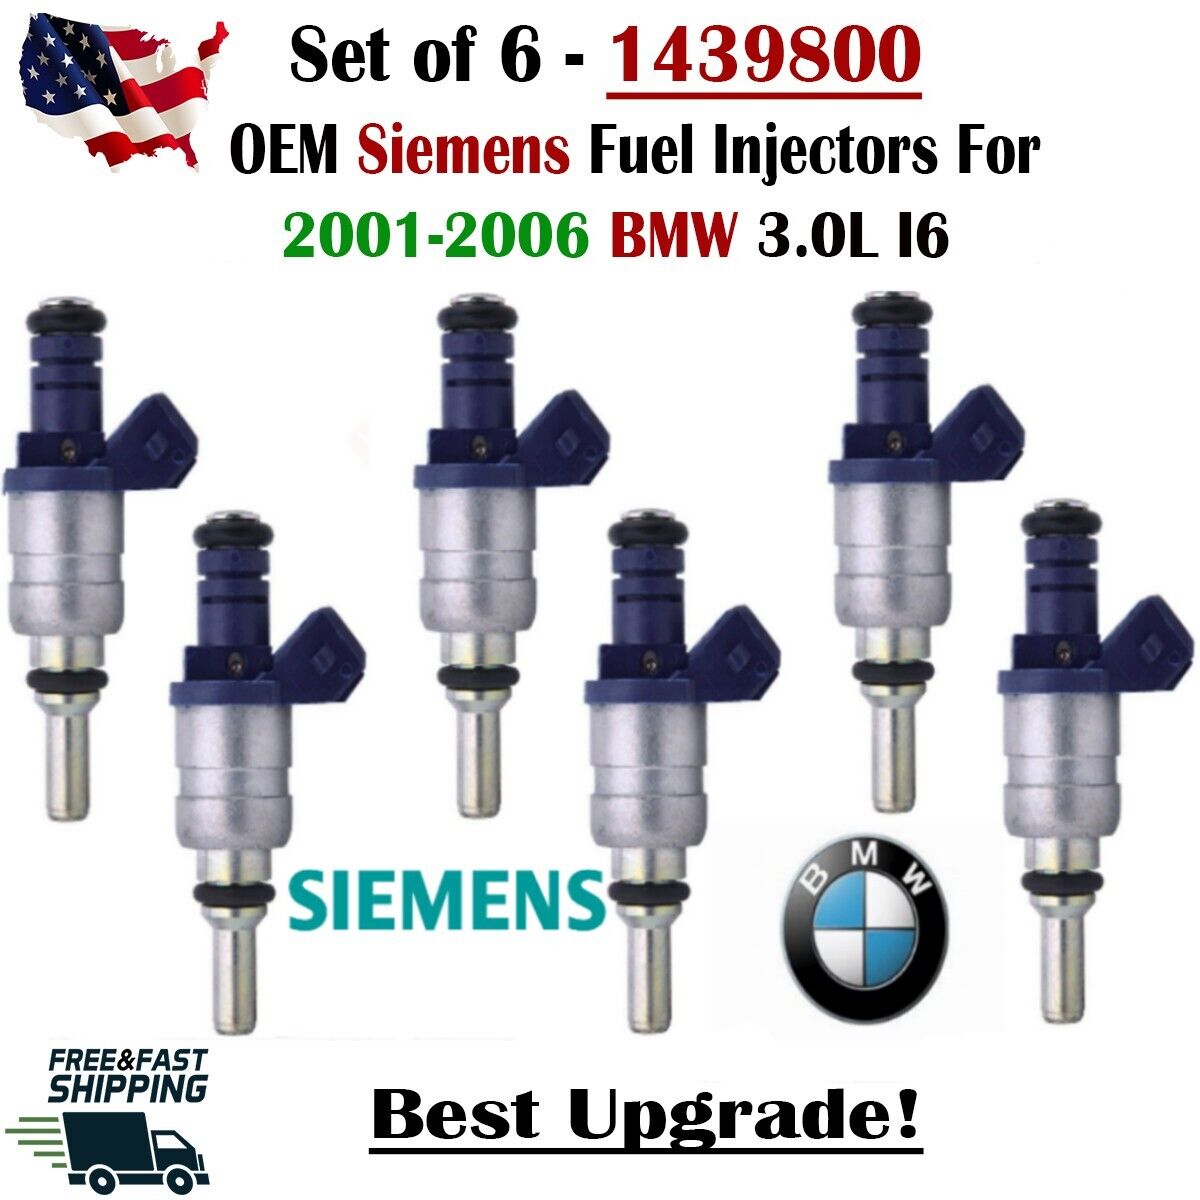 OEM Siemens x6  Best Upgrade  Fuel Injectors for 2001-2006 BMW 3.0L V6 #1439800